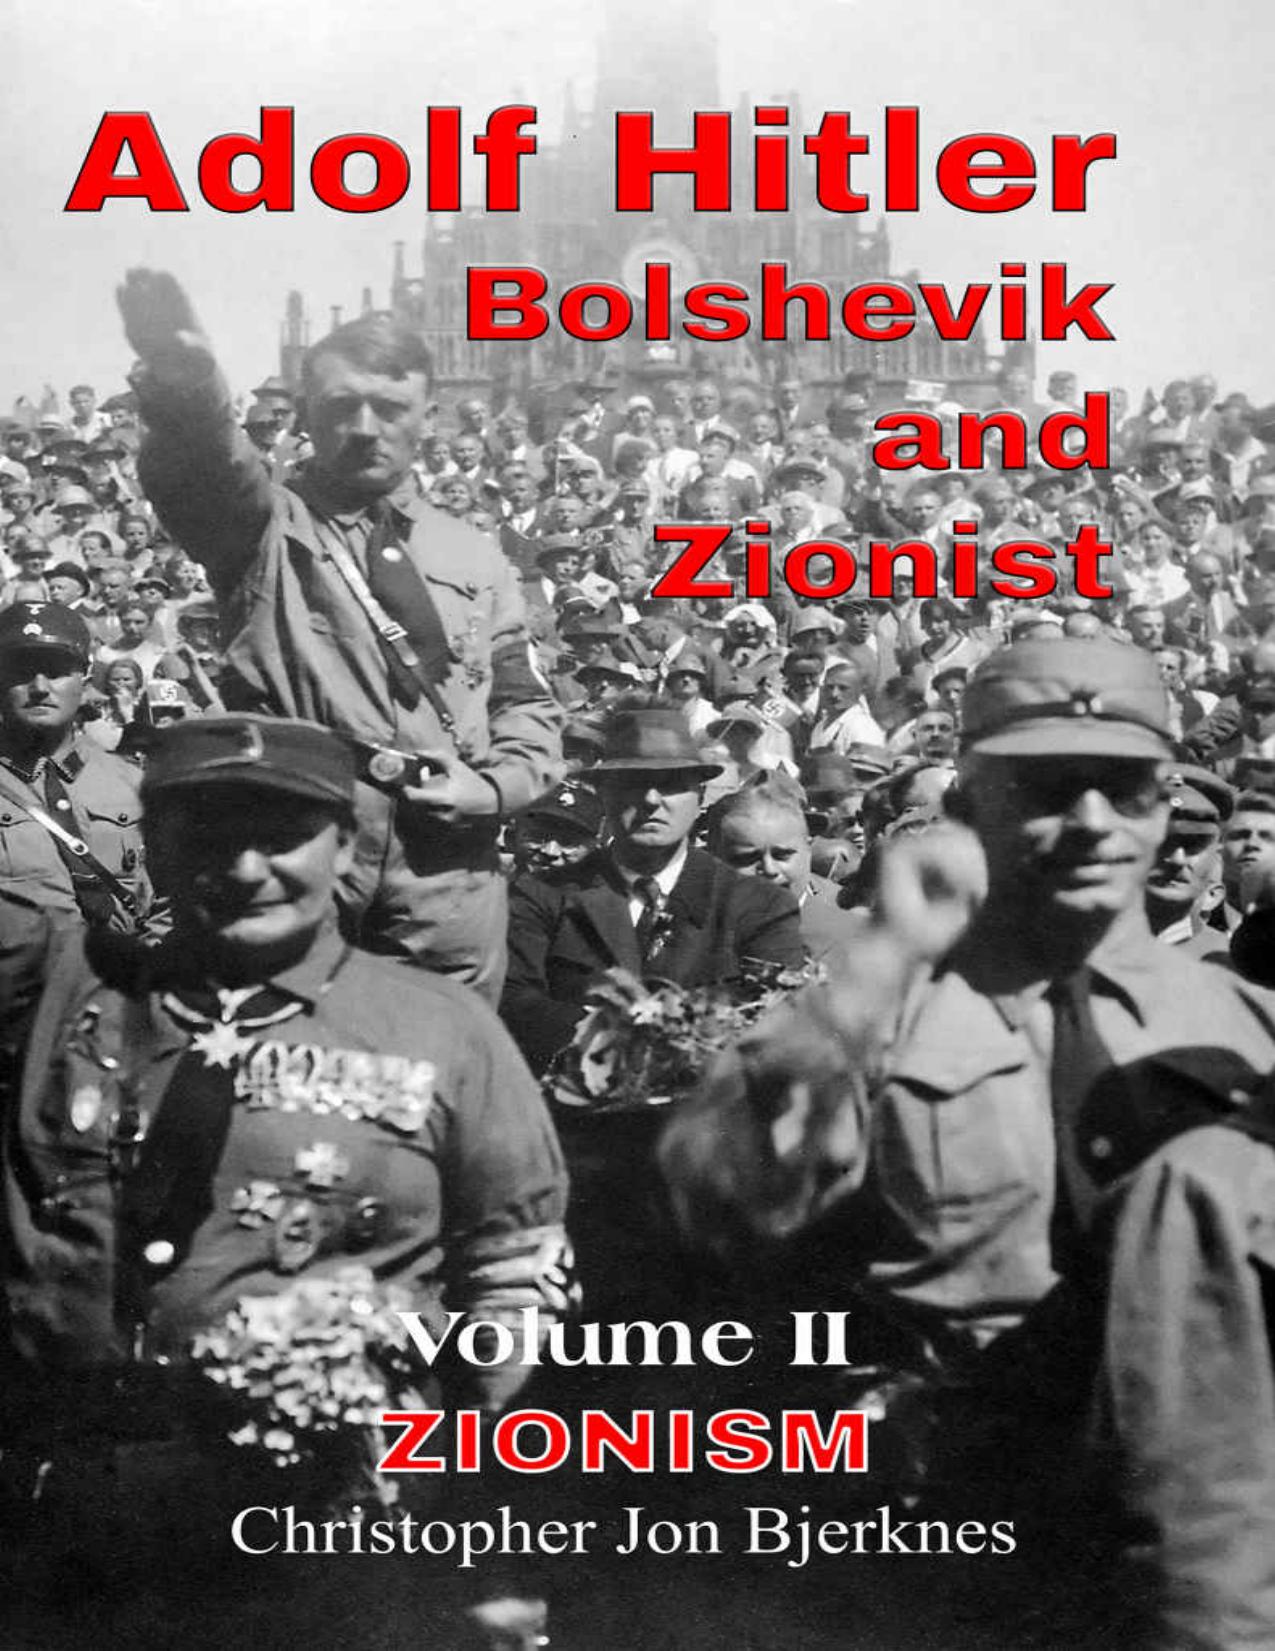 Adolf Hitler: Bolshevik and Zionist. Volume II: Zionism by Christopher Bjerknes